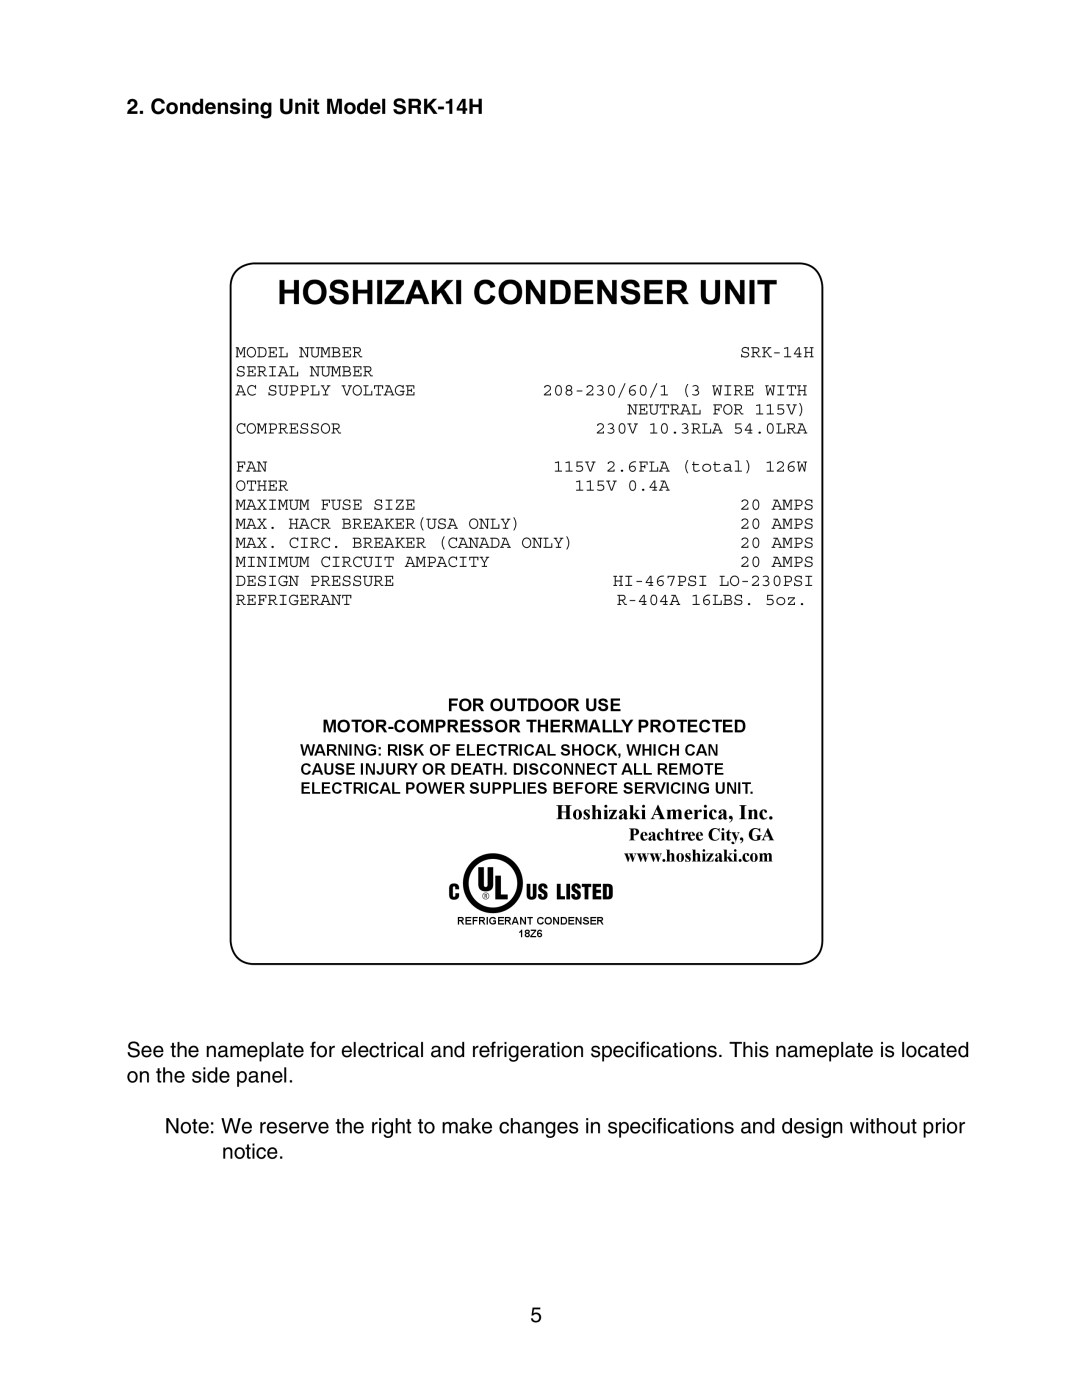 Hoshizaki KMS-1400MLH instruction manual Condensing Unit Model SRK-14H, Hoshizaki America, Inc 